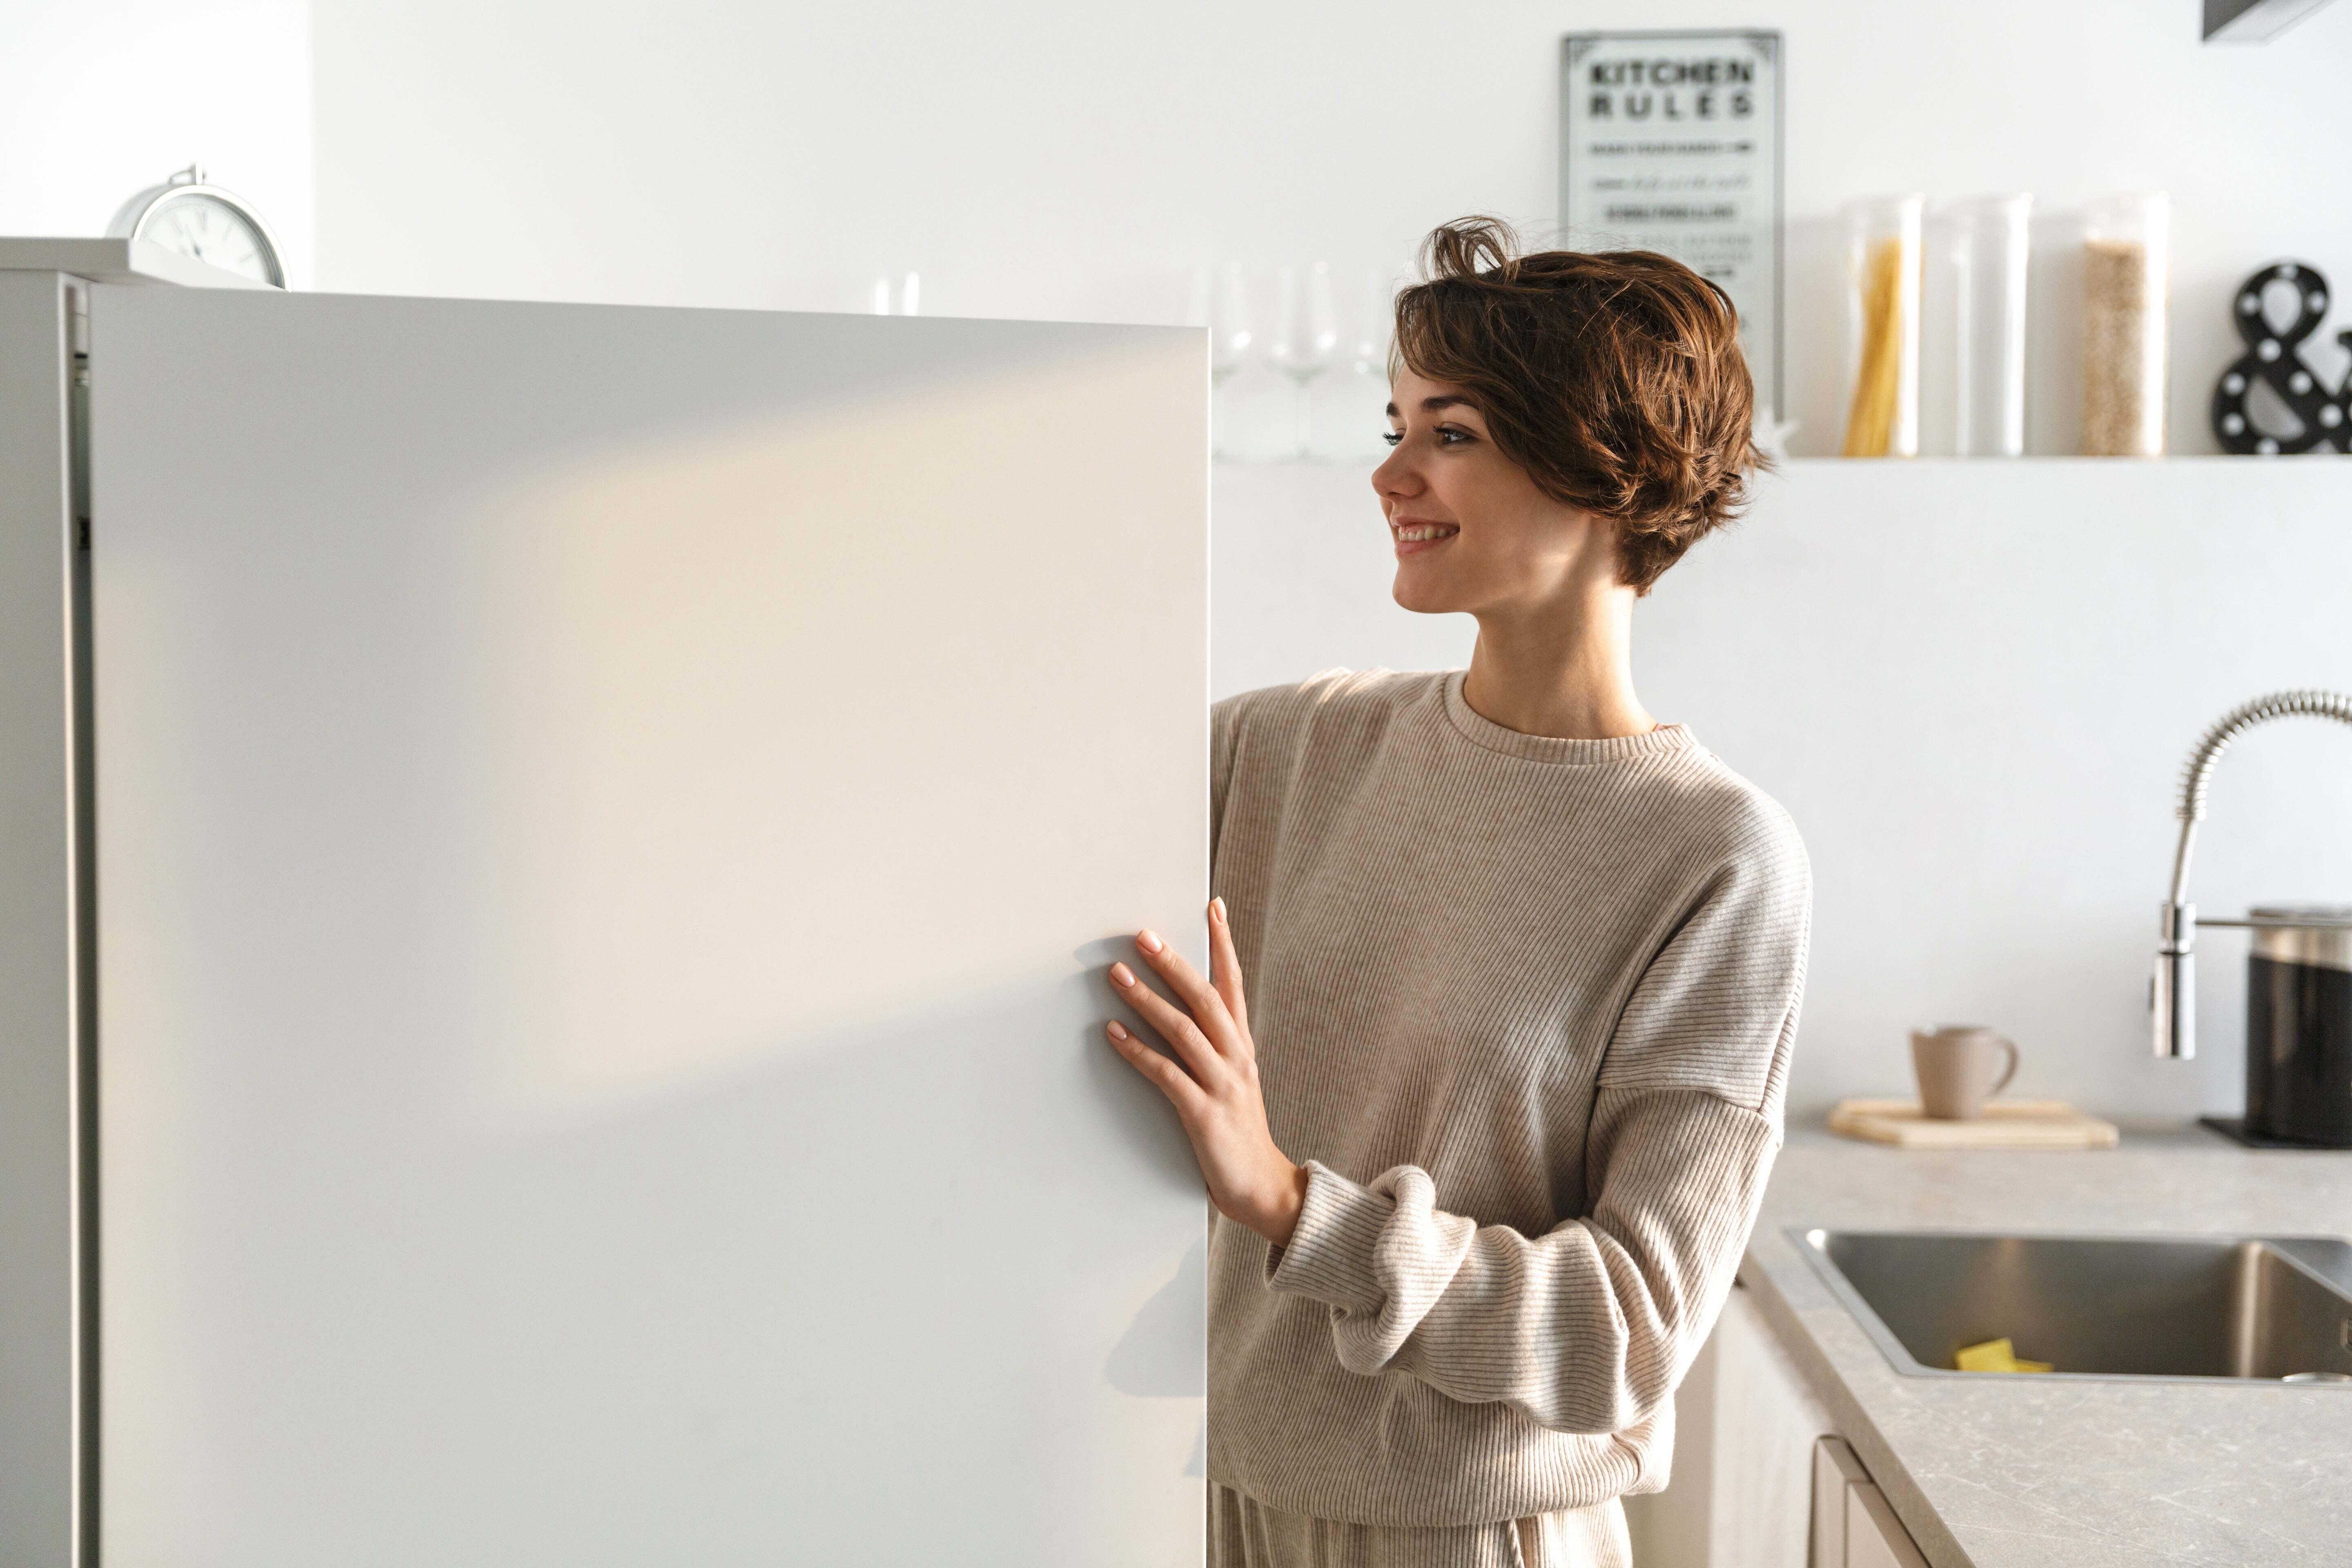 A woman reaching into her freezer